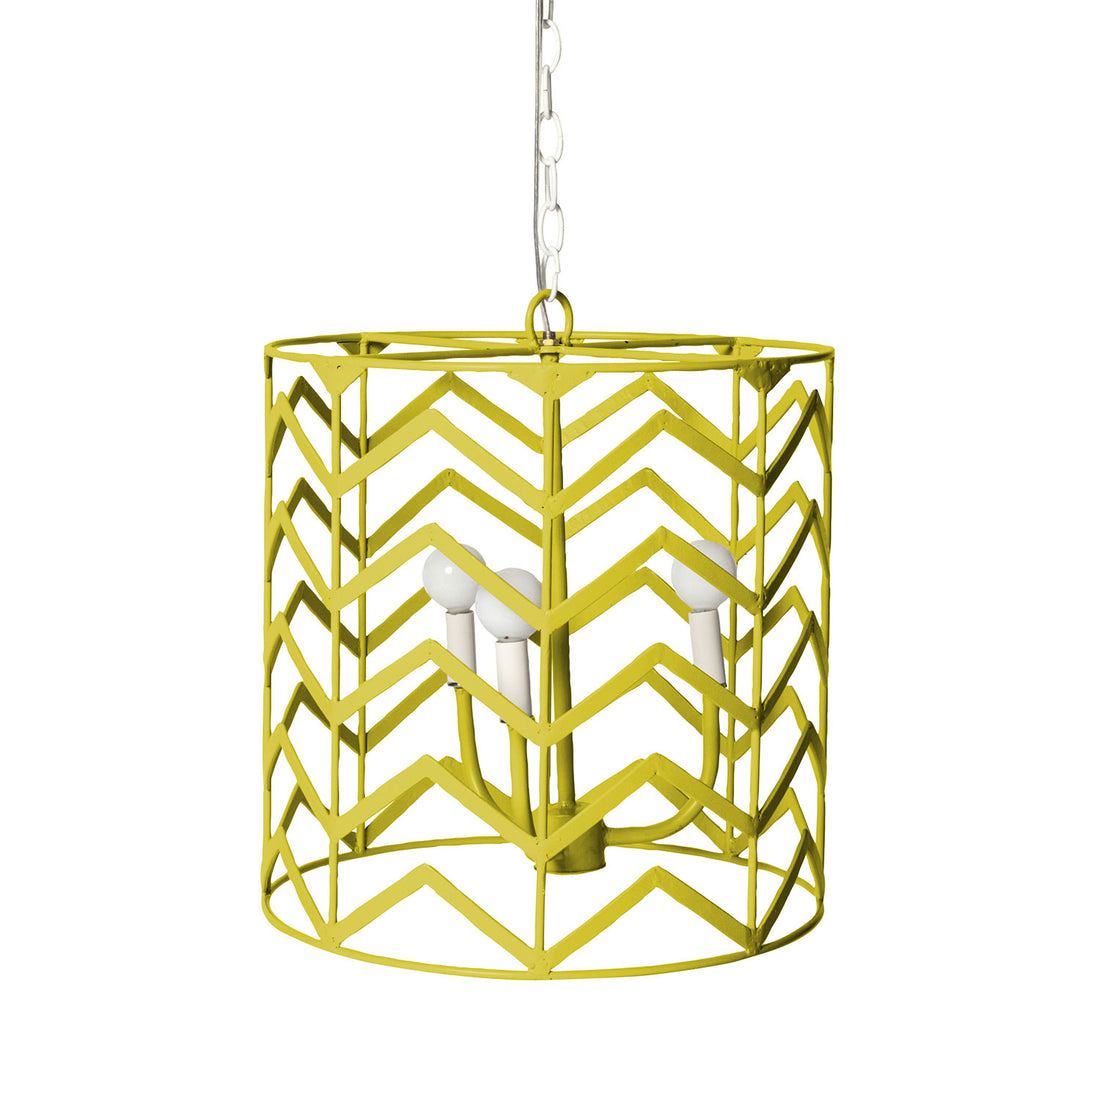 chartreuse iron chandelier with chevron design, Jonathon for Stray Dog Designs